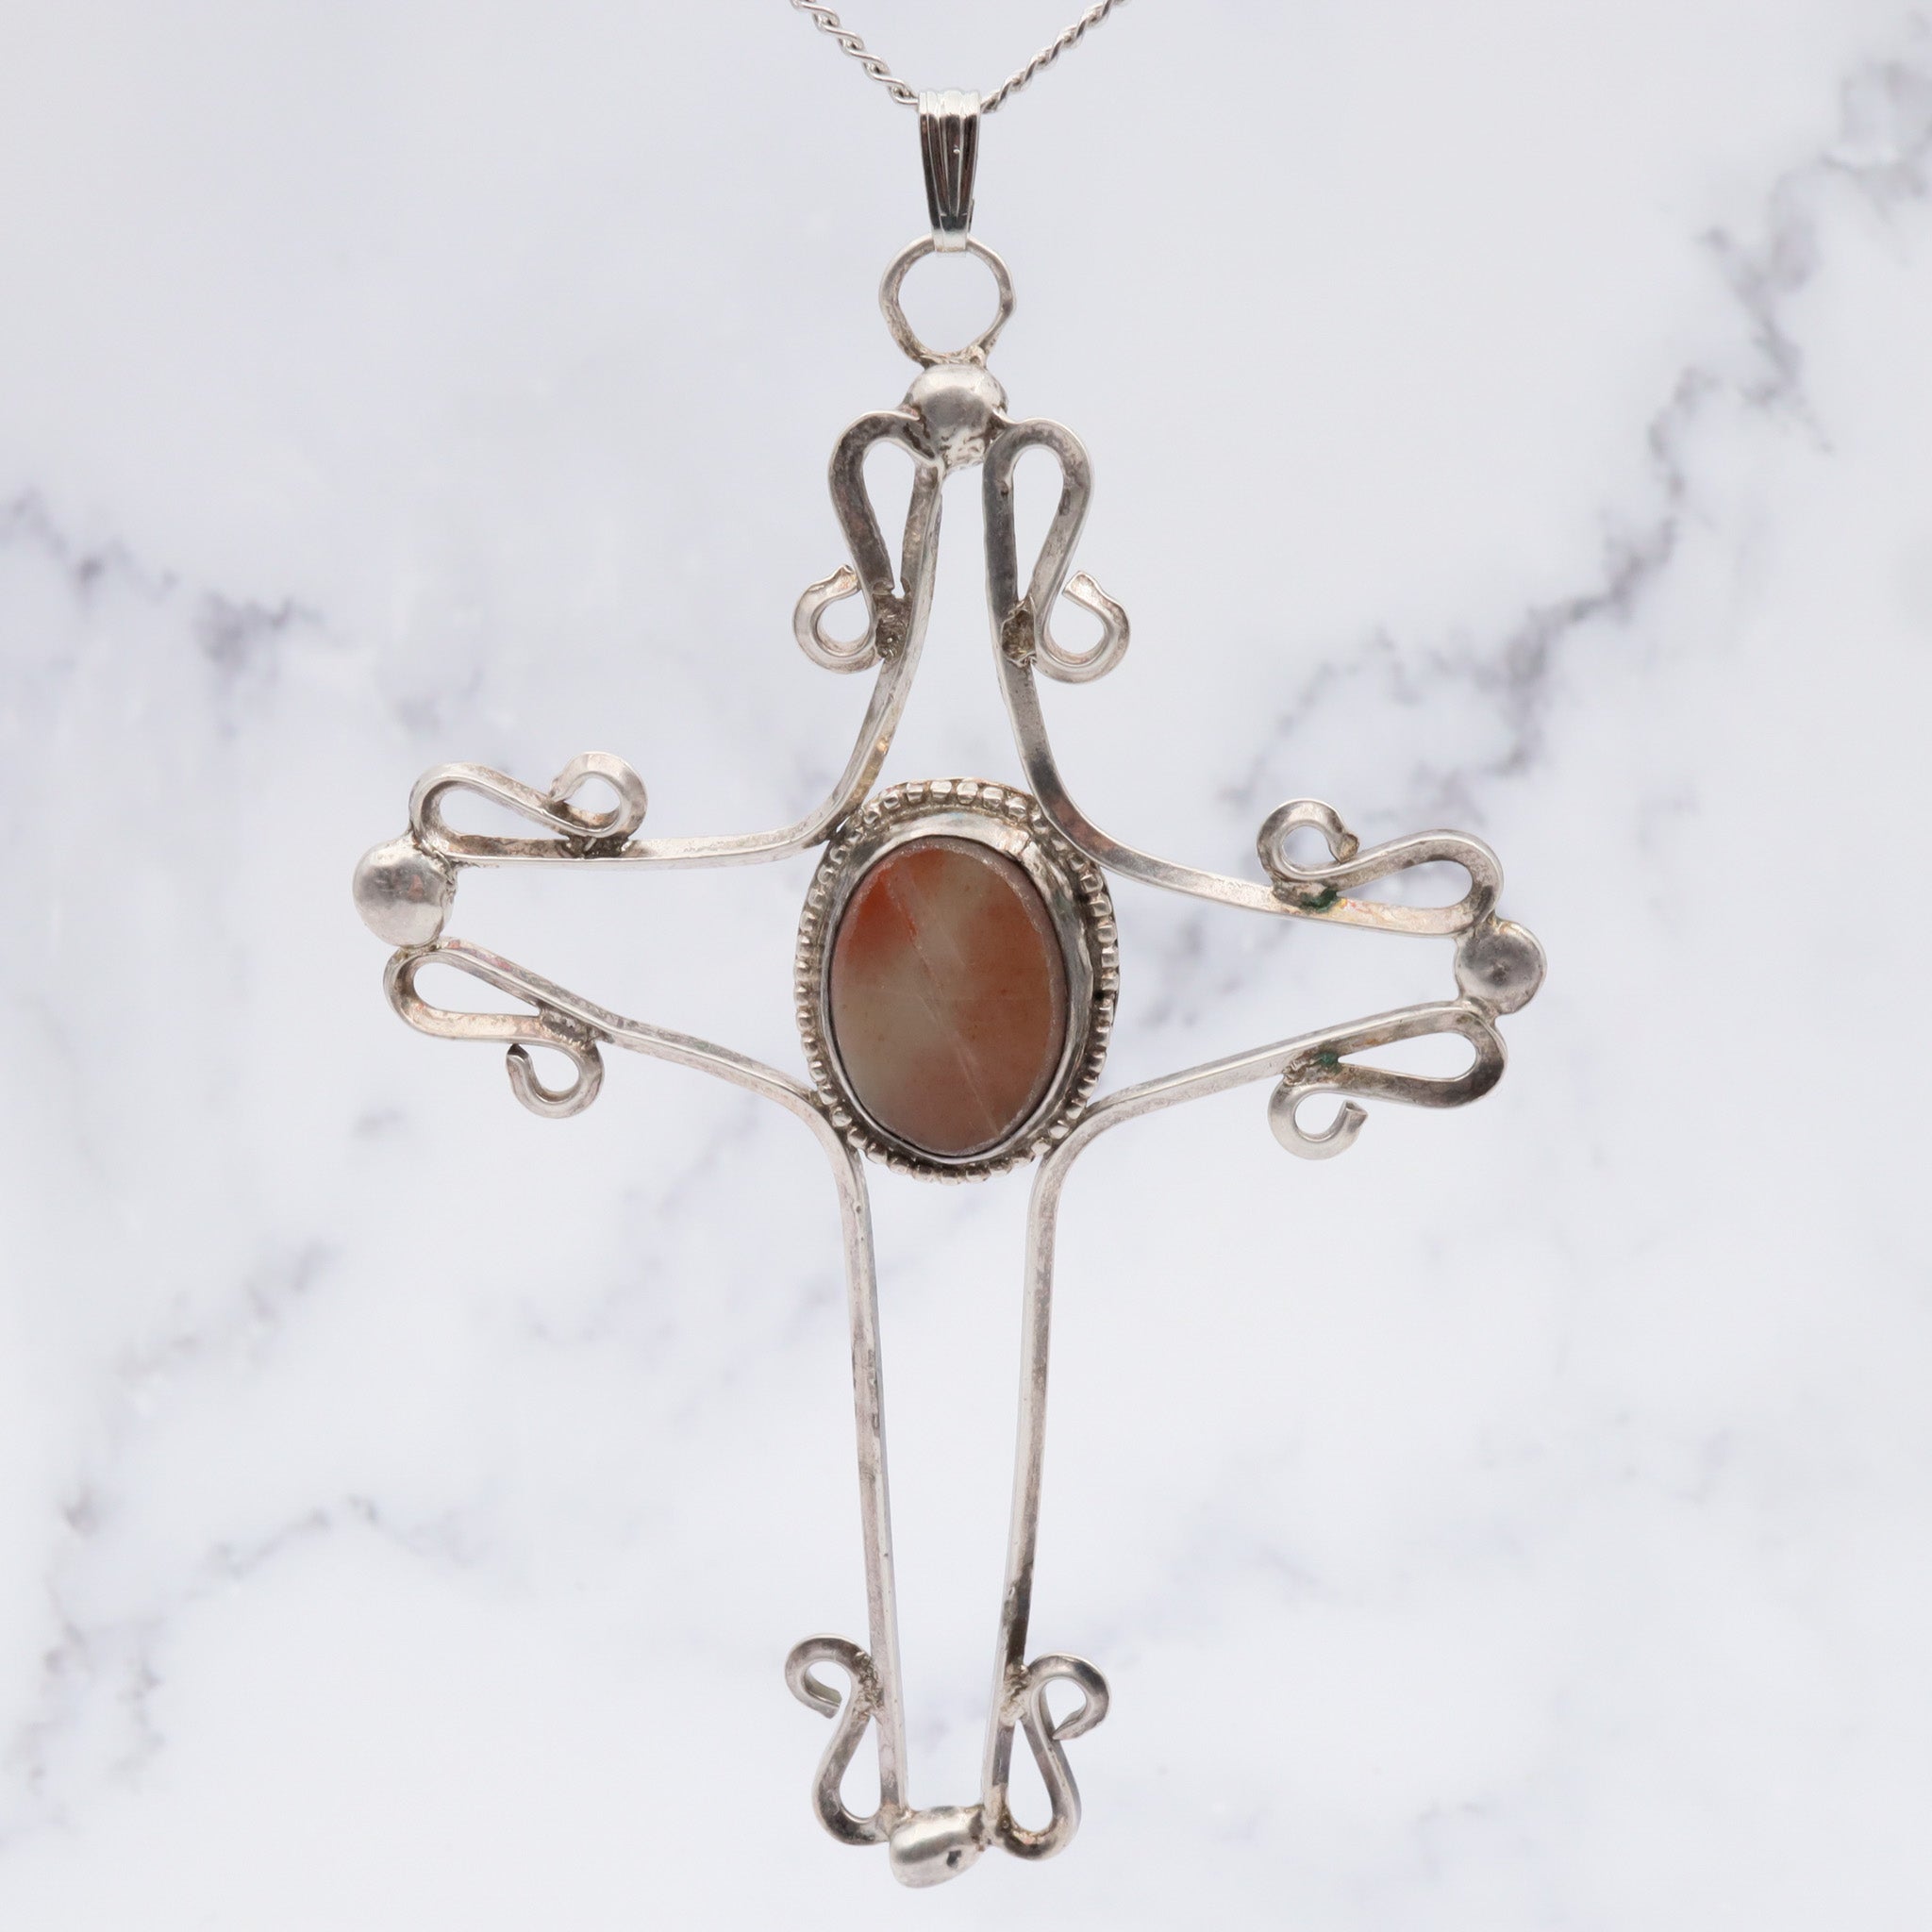 Antique handmade sterling silver & agate cross pendant